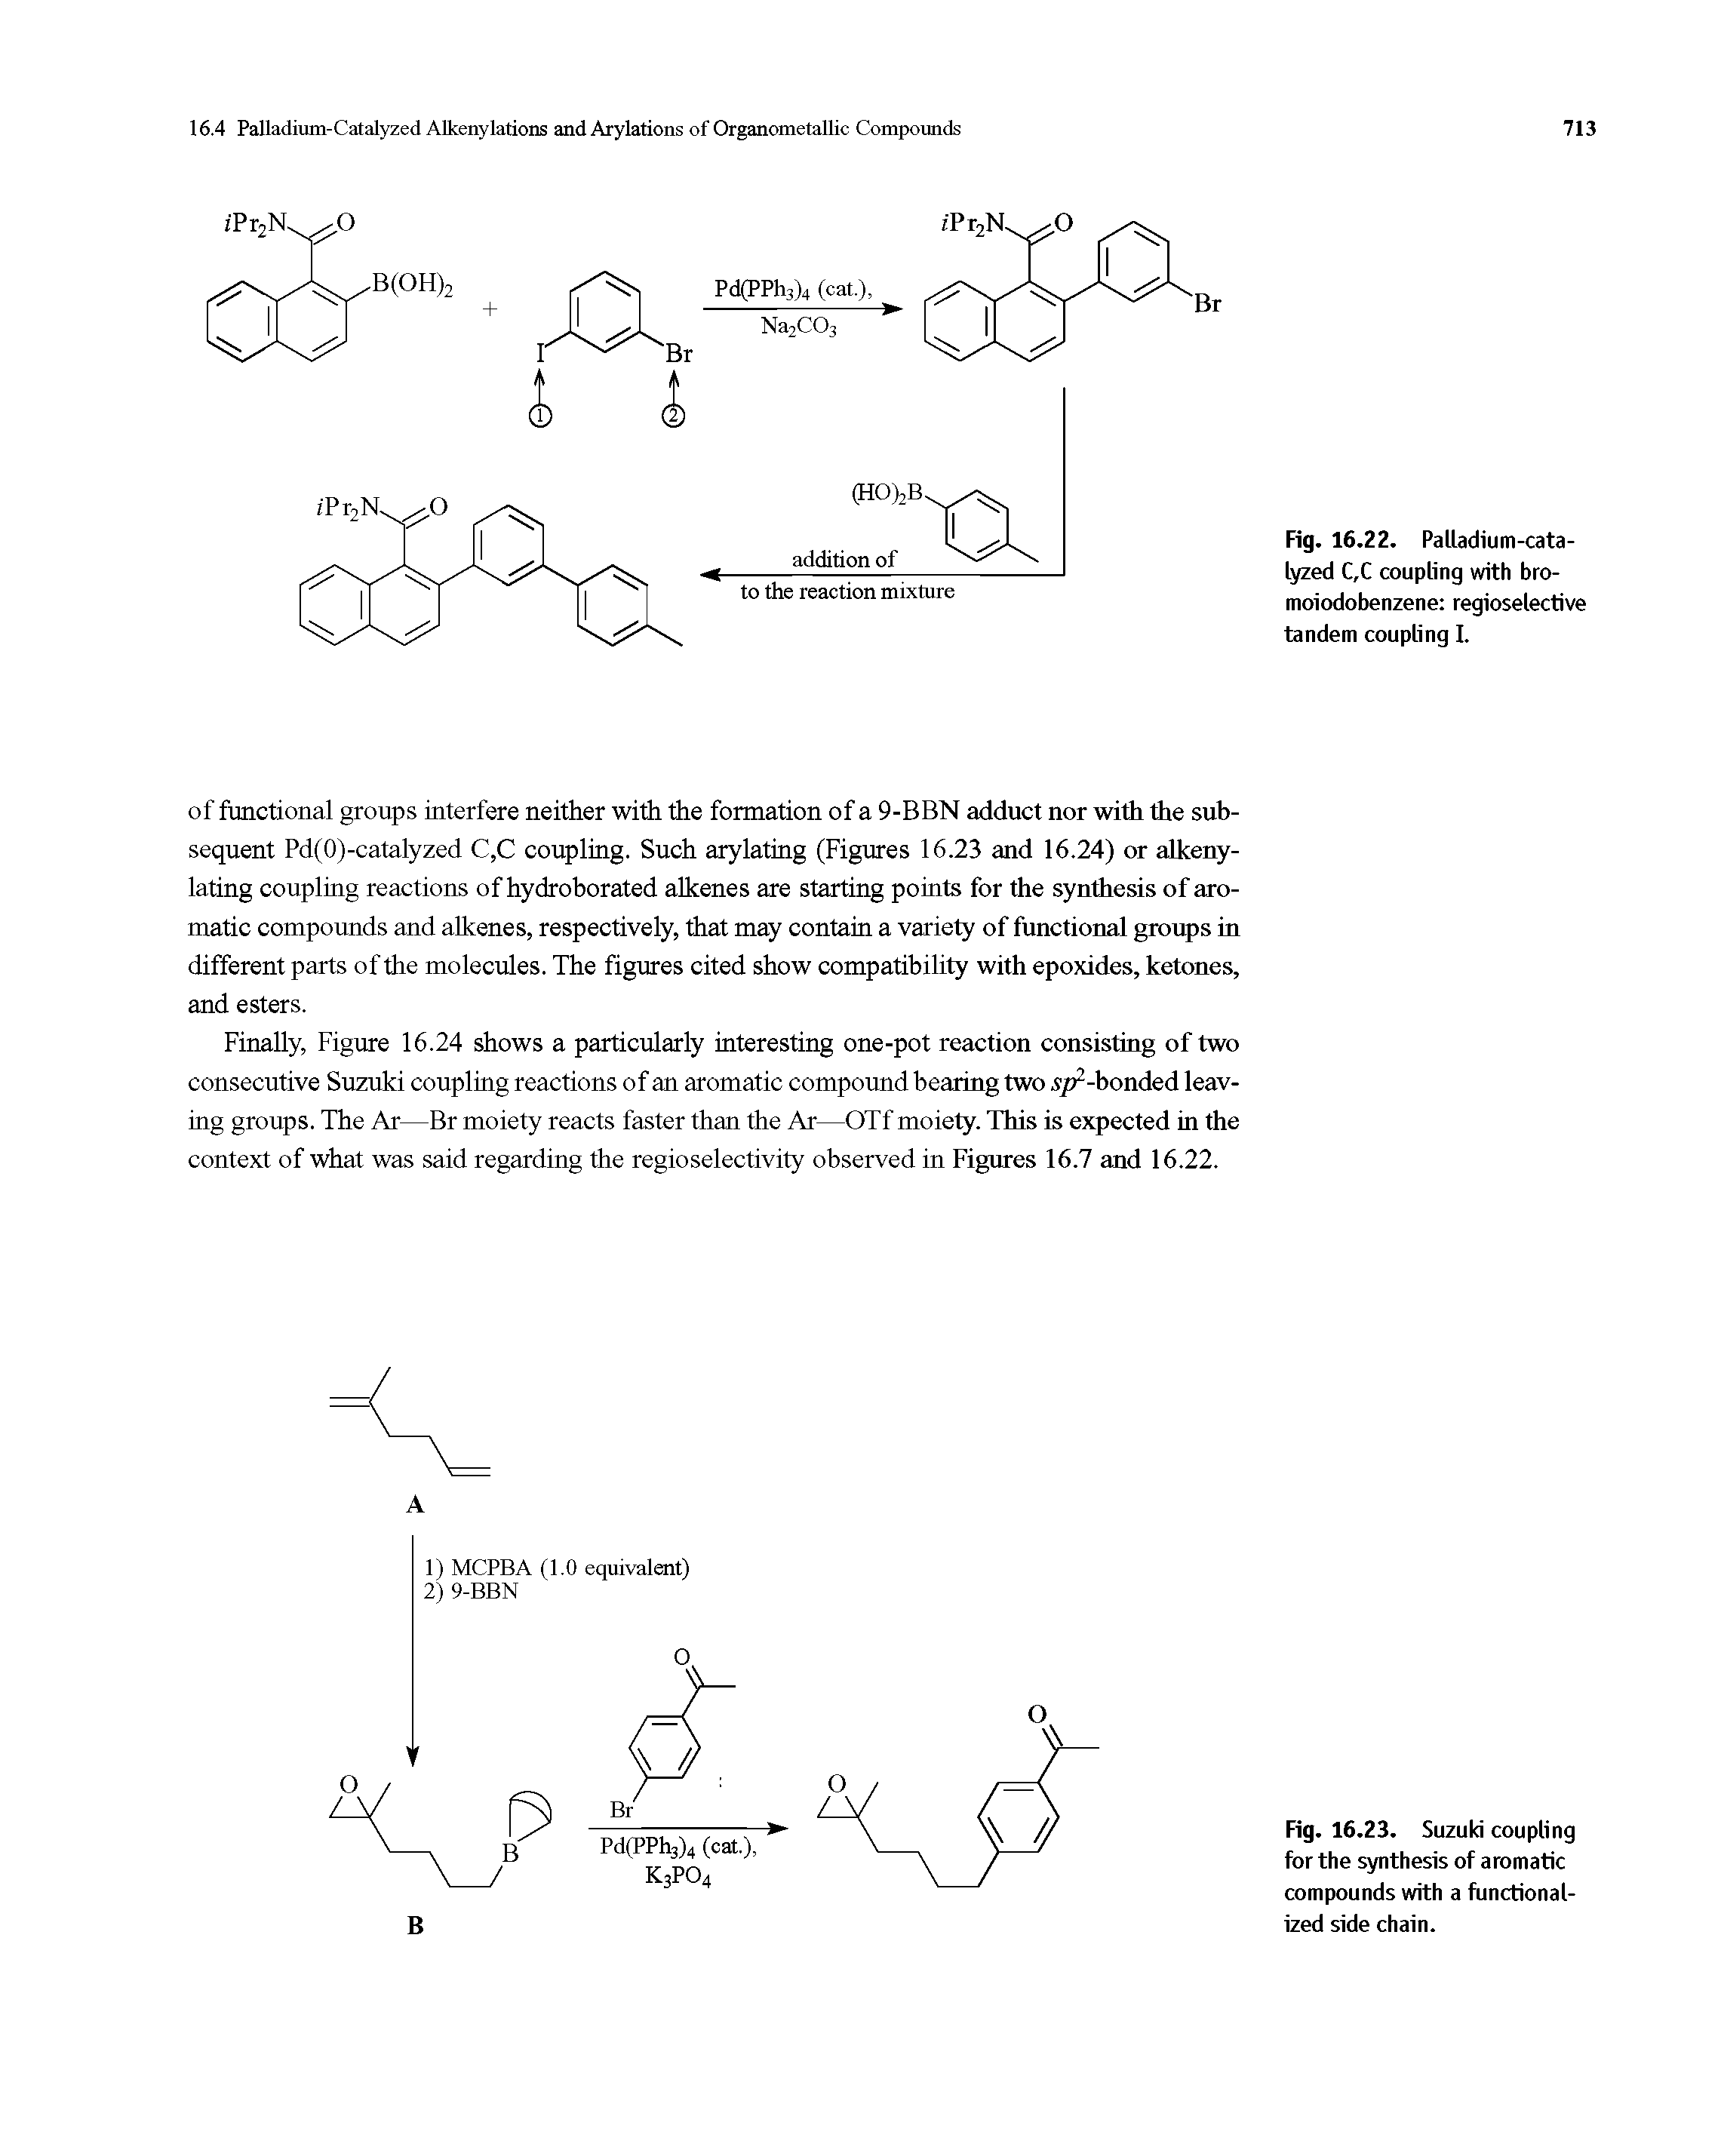 Fig. 16.22. Palladium-catalyzed C,C coupling with bro-moiodobenzene regioselective tandem coupling I.